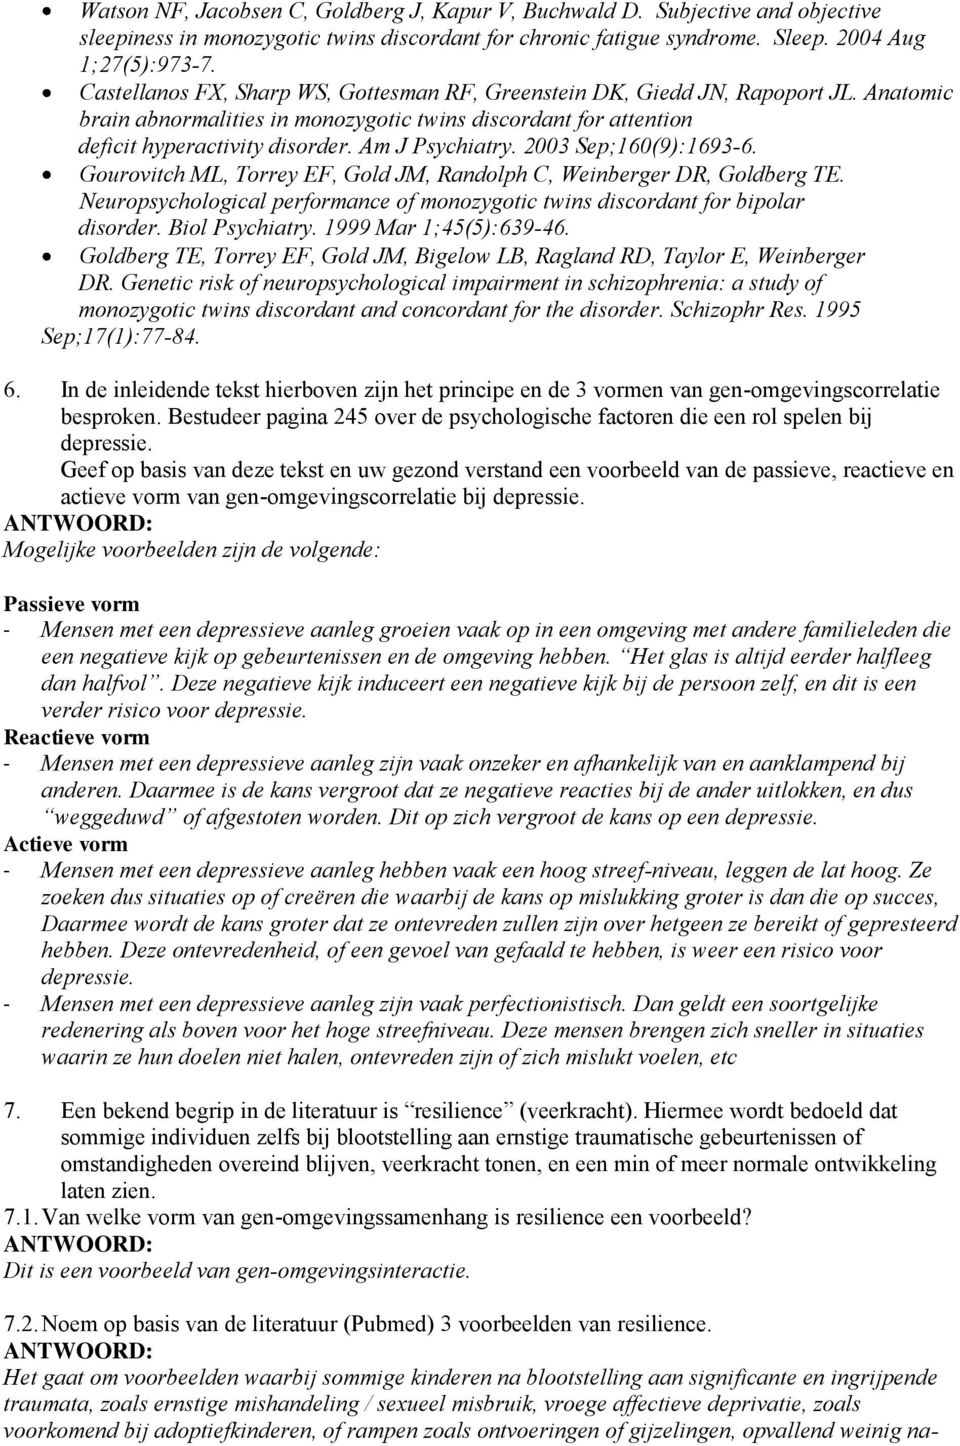 Am J Psychiatry. 2003 Sep;160(9):1693-6. Gourovitch ML, Torrey EF, Gold JM, Randolph C, Weinberger DR, Goldberg TE. Neuropsychological performance of monozygotic twins discordant for bipolar disorder.